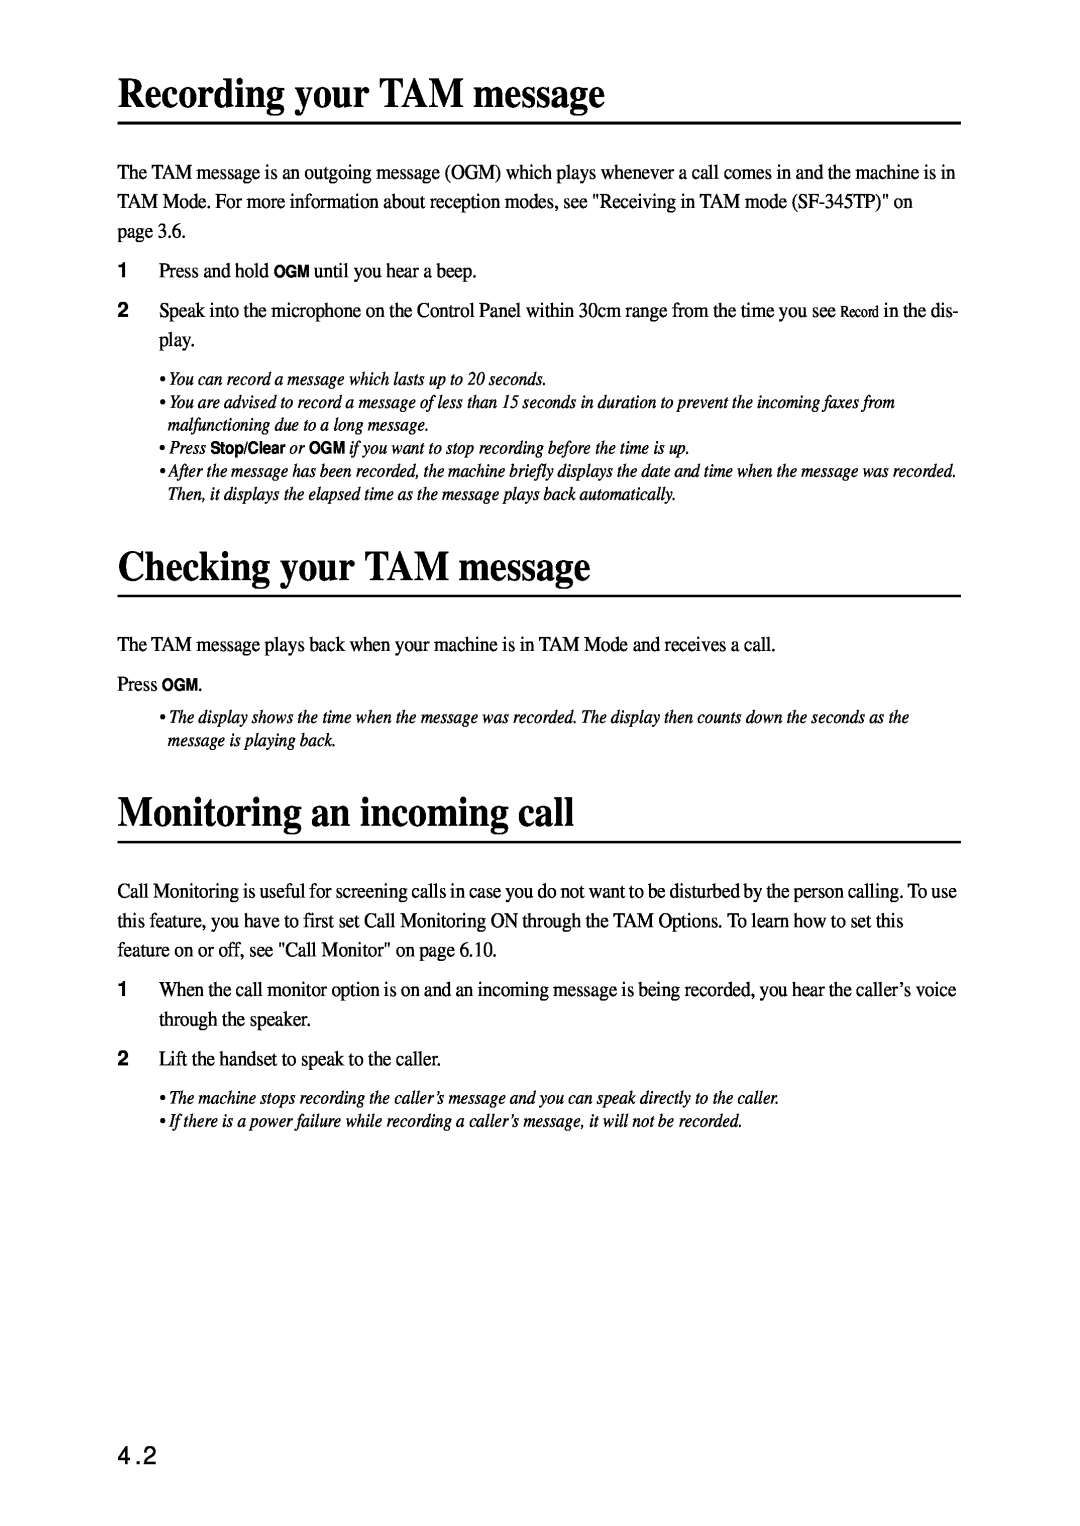 Samsung SF-340 Series manual Recording your TAM message, Checking your TAM message, Monitoring an incoming call 